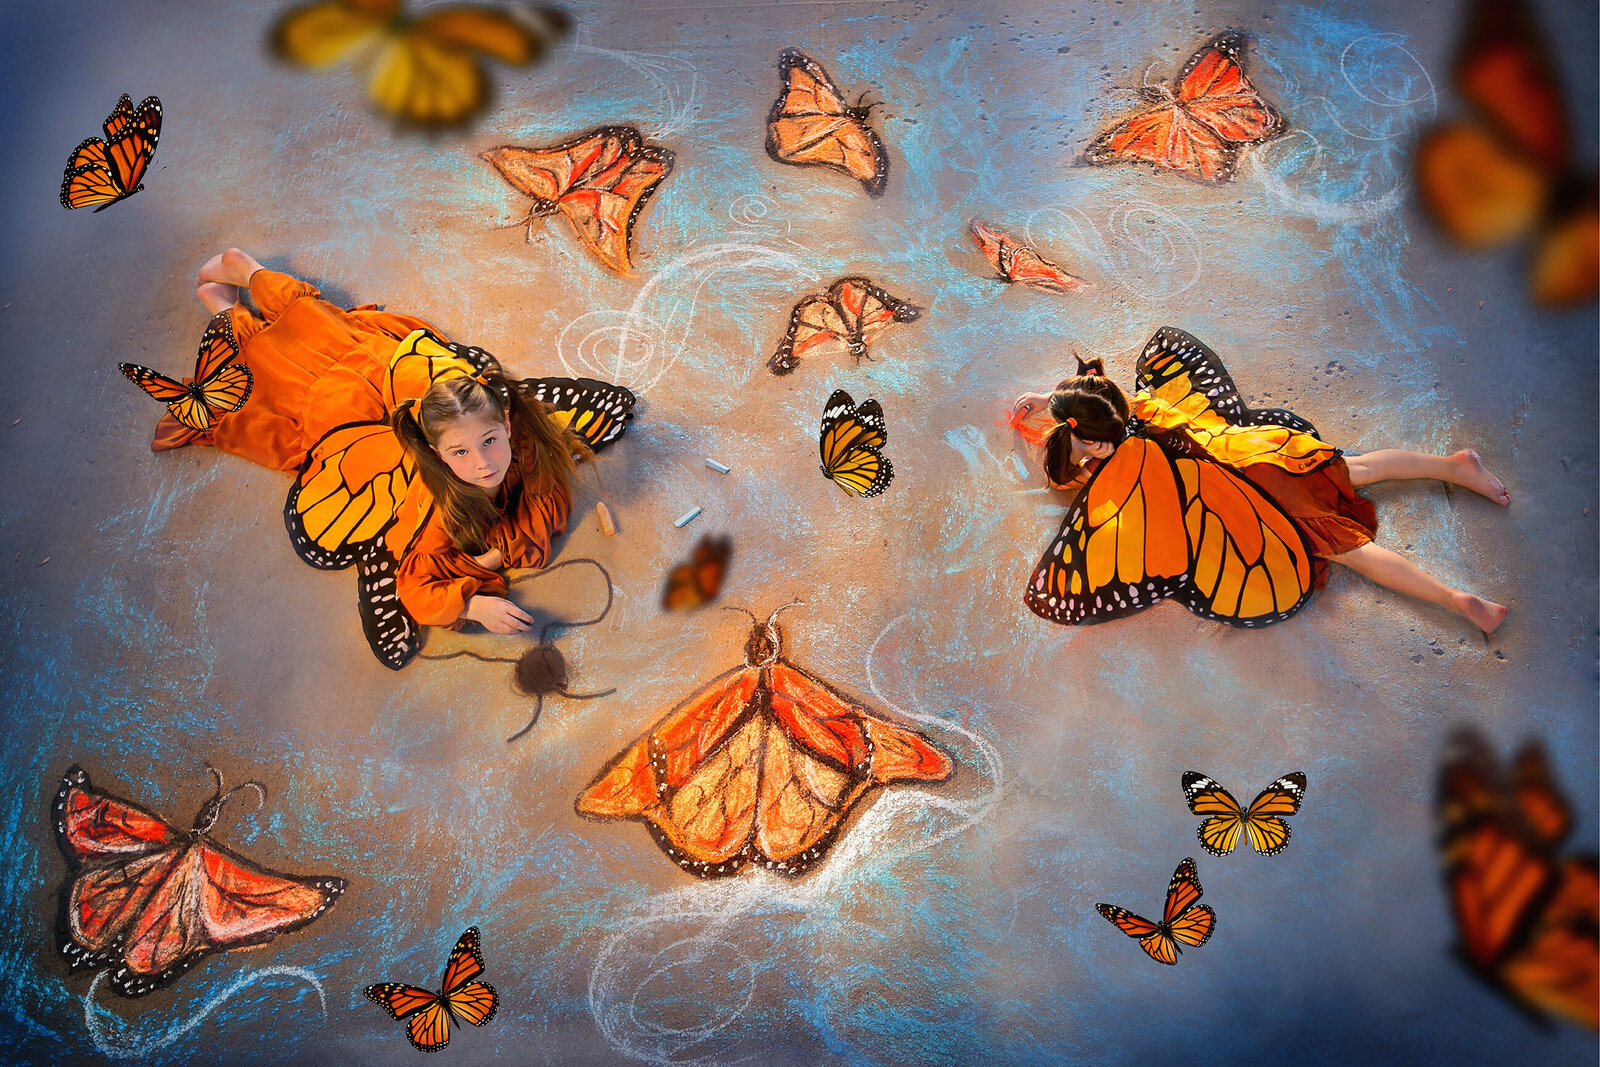 butterfly-monarch-migration-kids-chalk-unique-creative-art-colorful-vibrant-bright-imagination-play